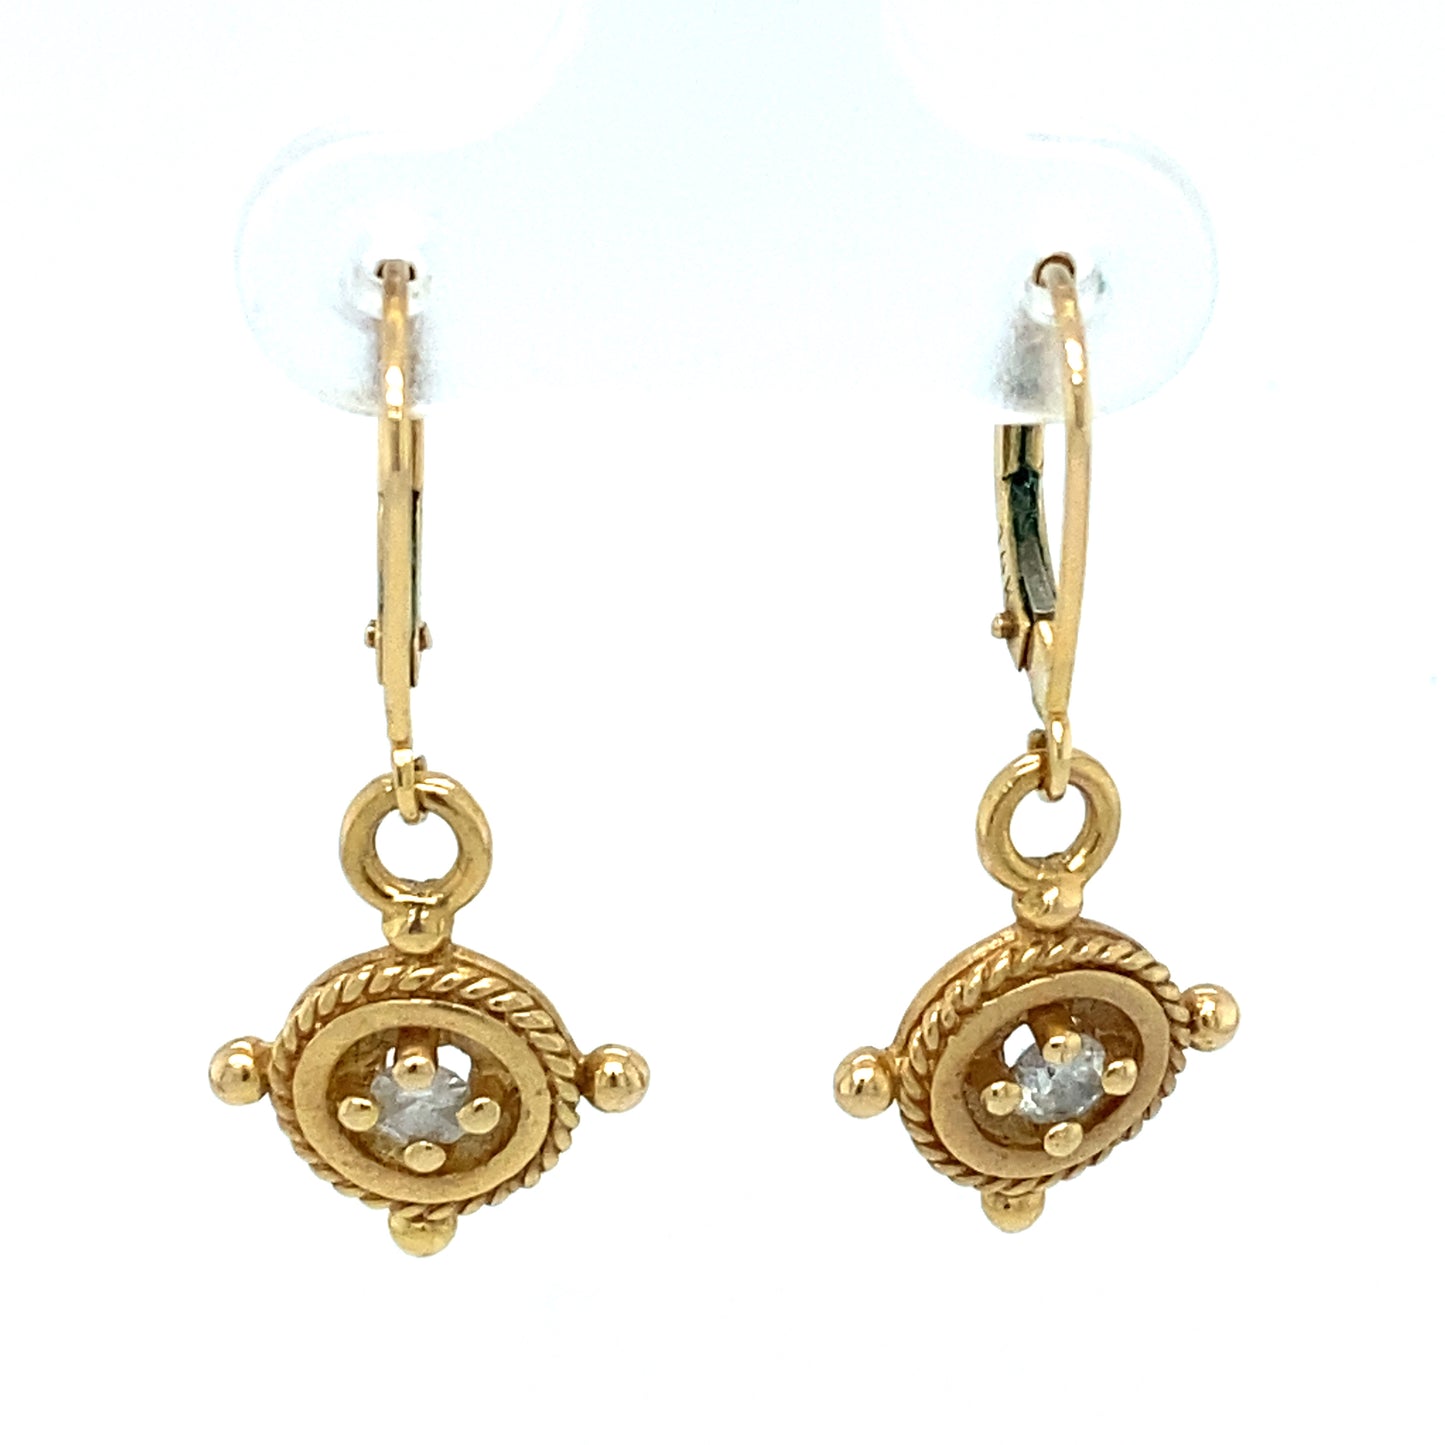 Circa 2000s Diamond Charm Dangle Earrings in 14K Gold